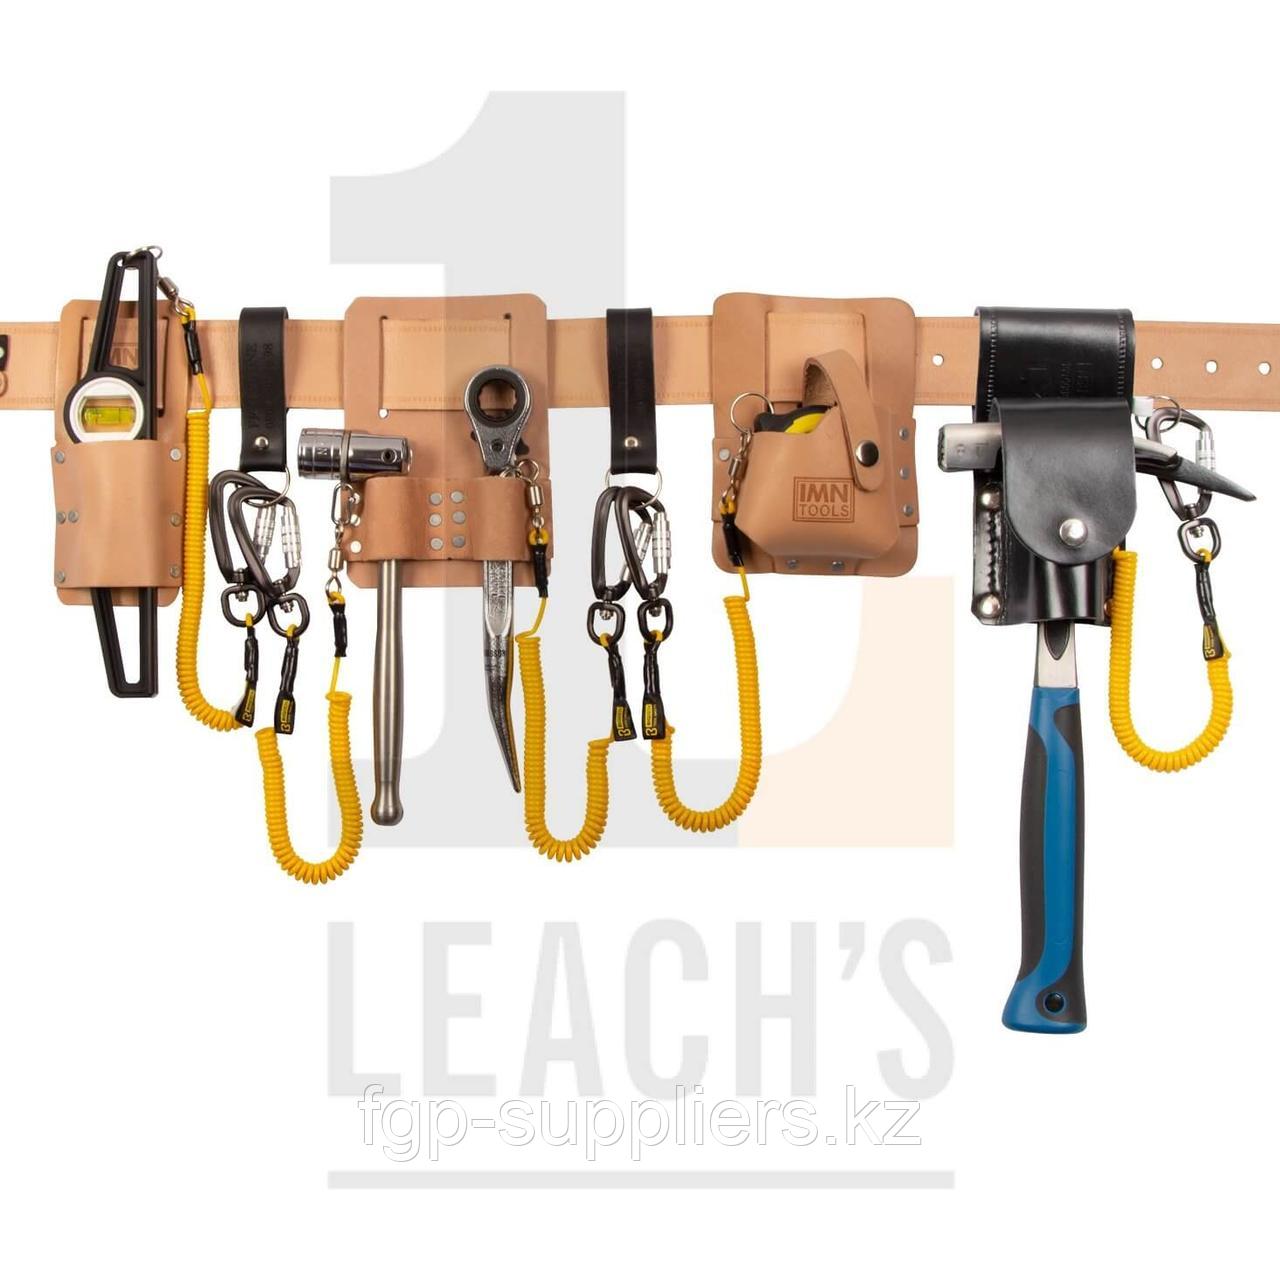 IMN Contractors Leather Tethered Tool & Belt Set c/w Hammer - Natural / IMN кожаный комплект инструментов на страховочном ремешке в/к молоток -